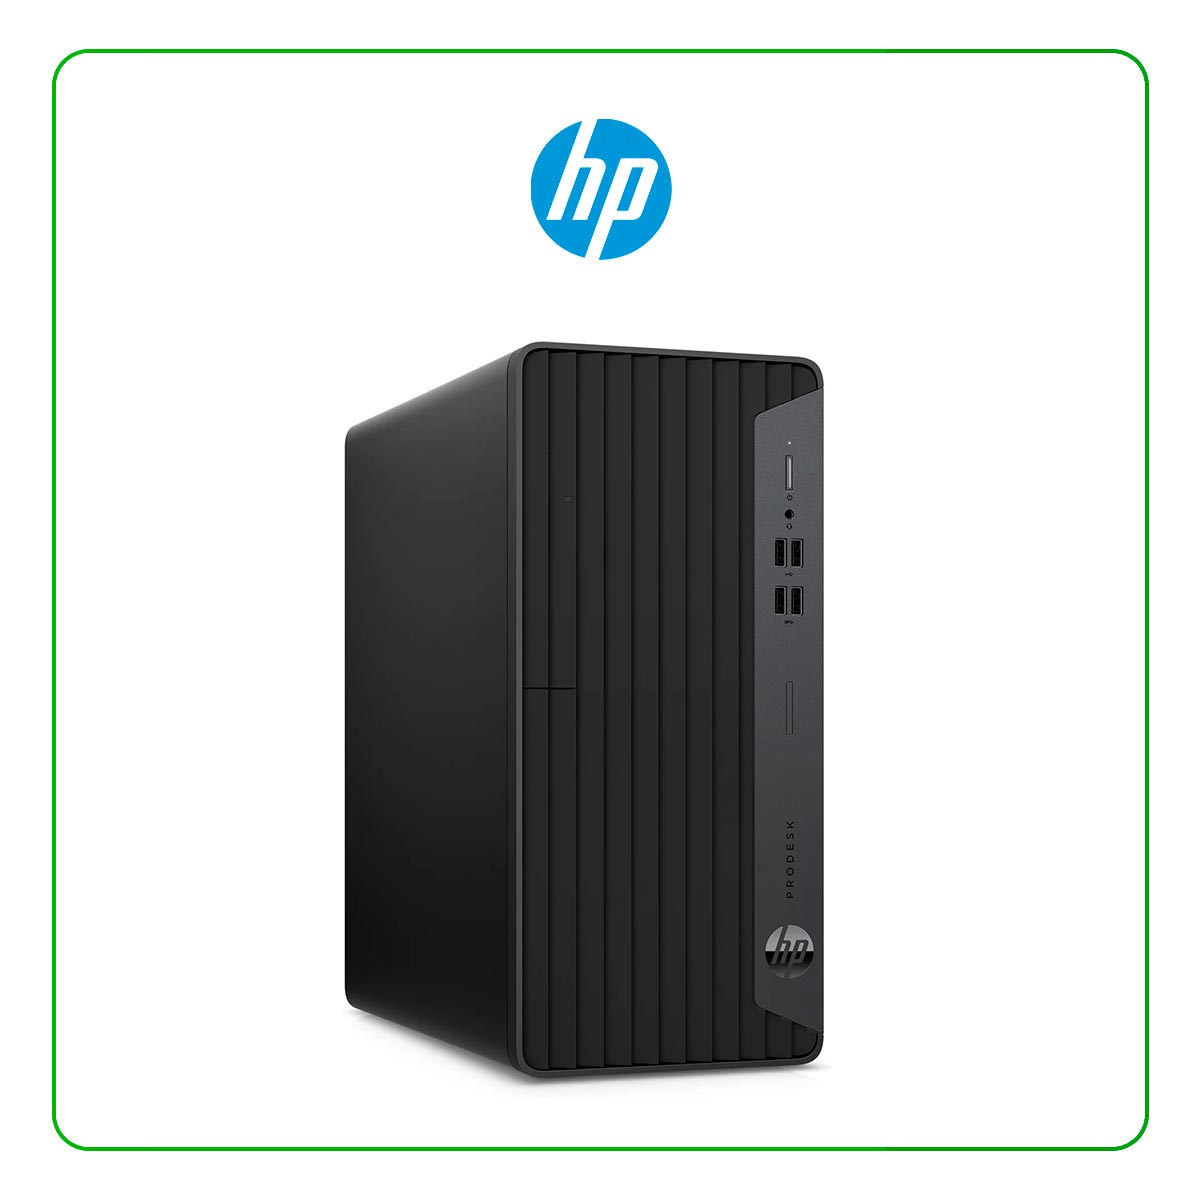 PC HP PRODESK 400 G7 | INTEL CORE I7 10700 | 512GB M.2 SSD PCI | 8GB RAM DDR4 | GPU INTEL UHD GRAPHICS | WIFI + BT | TECLADO + MOUSE | WINDOWS 10